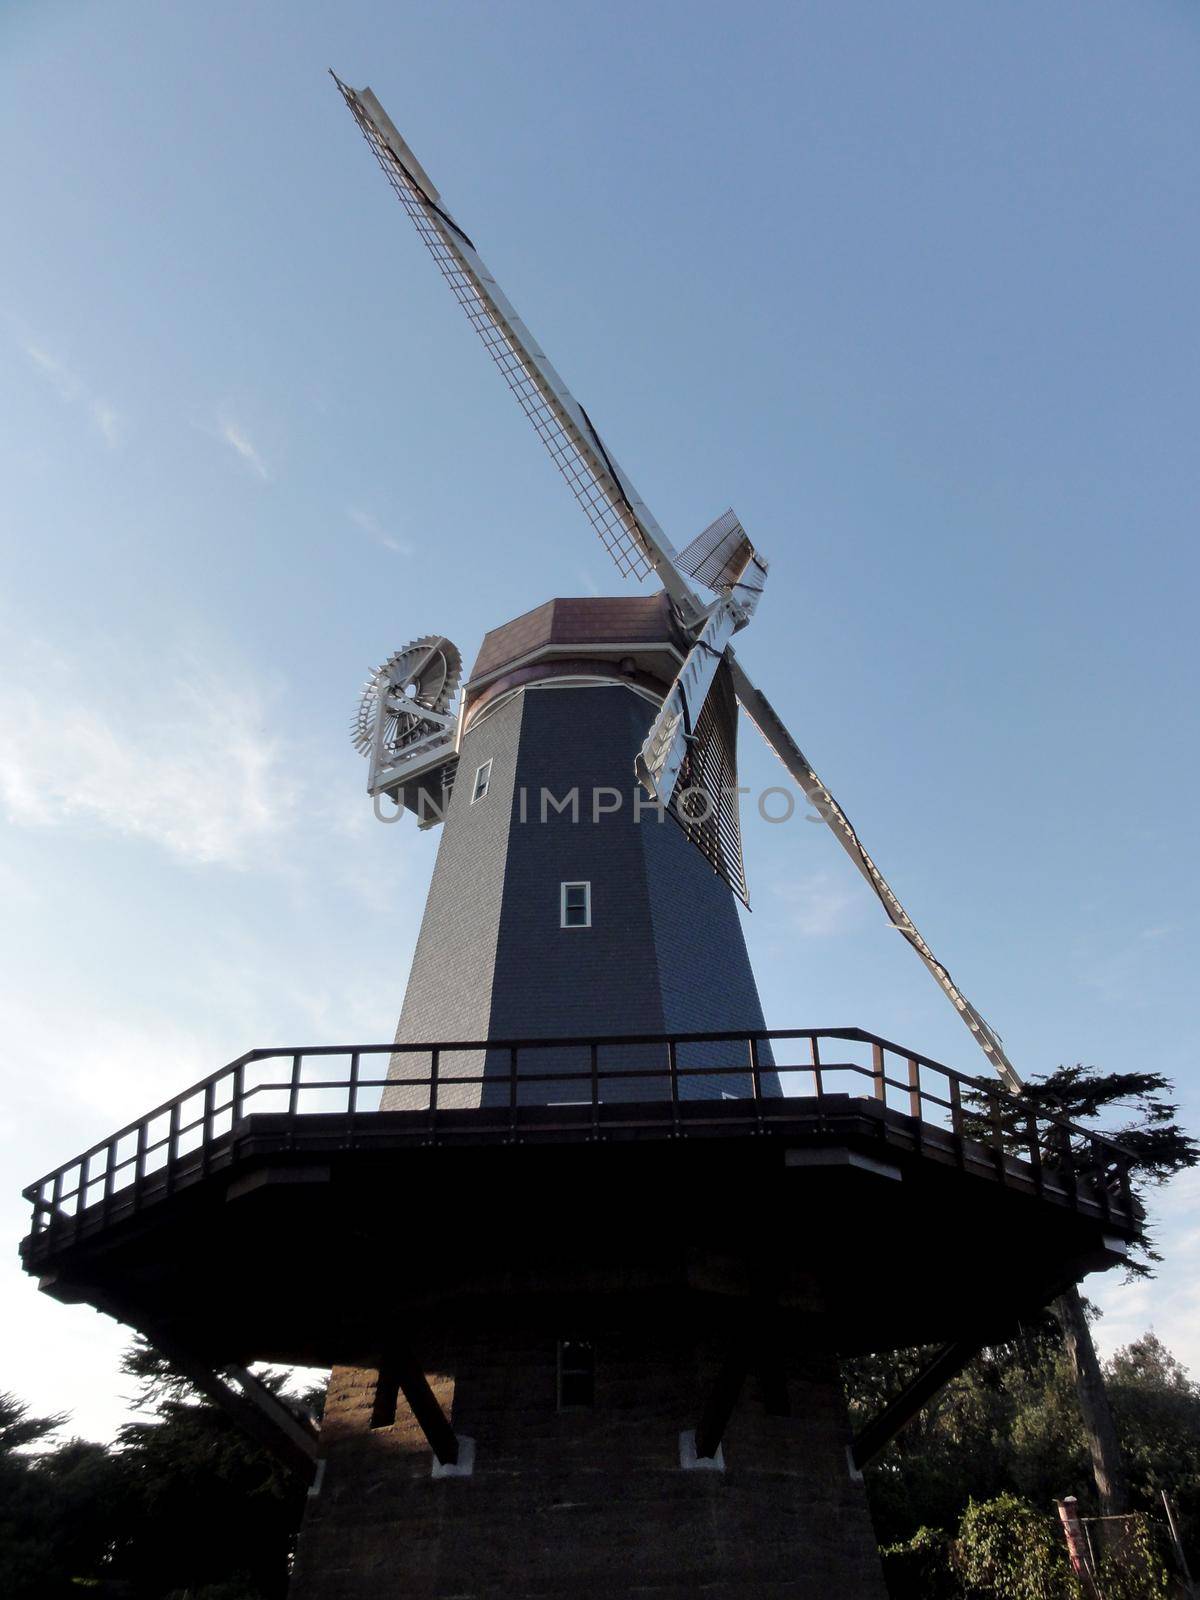 Murphy Windmill by EricGBVD